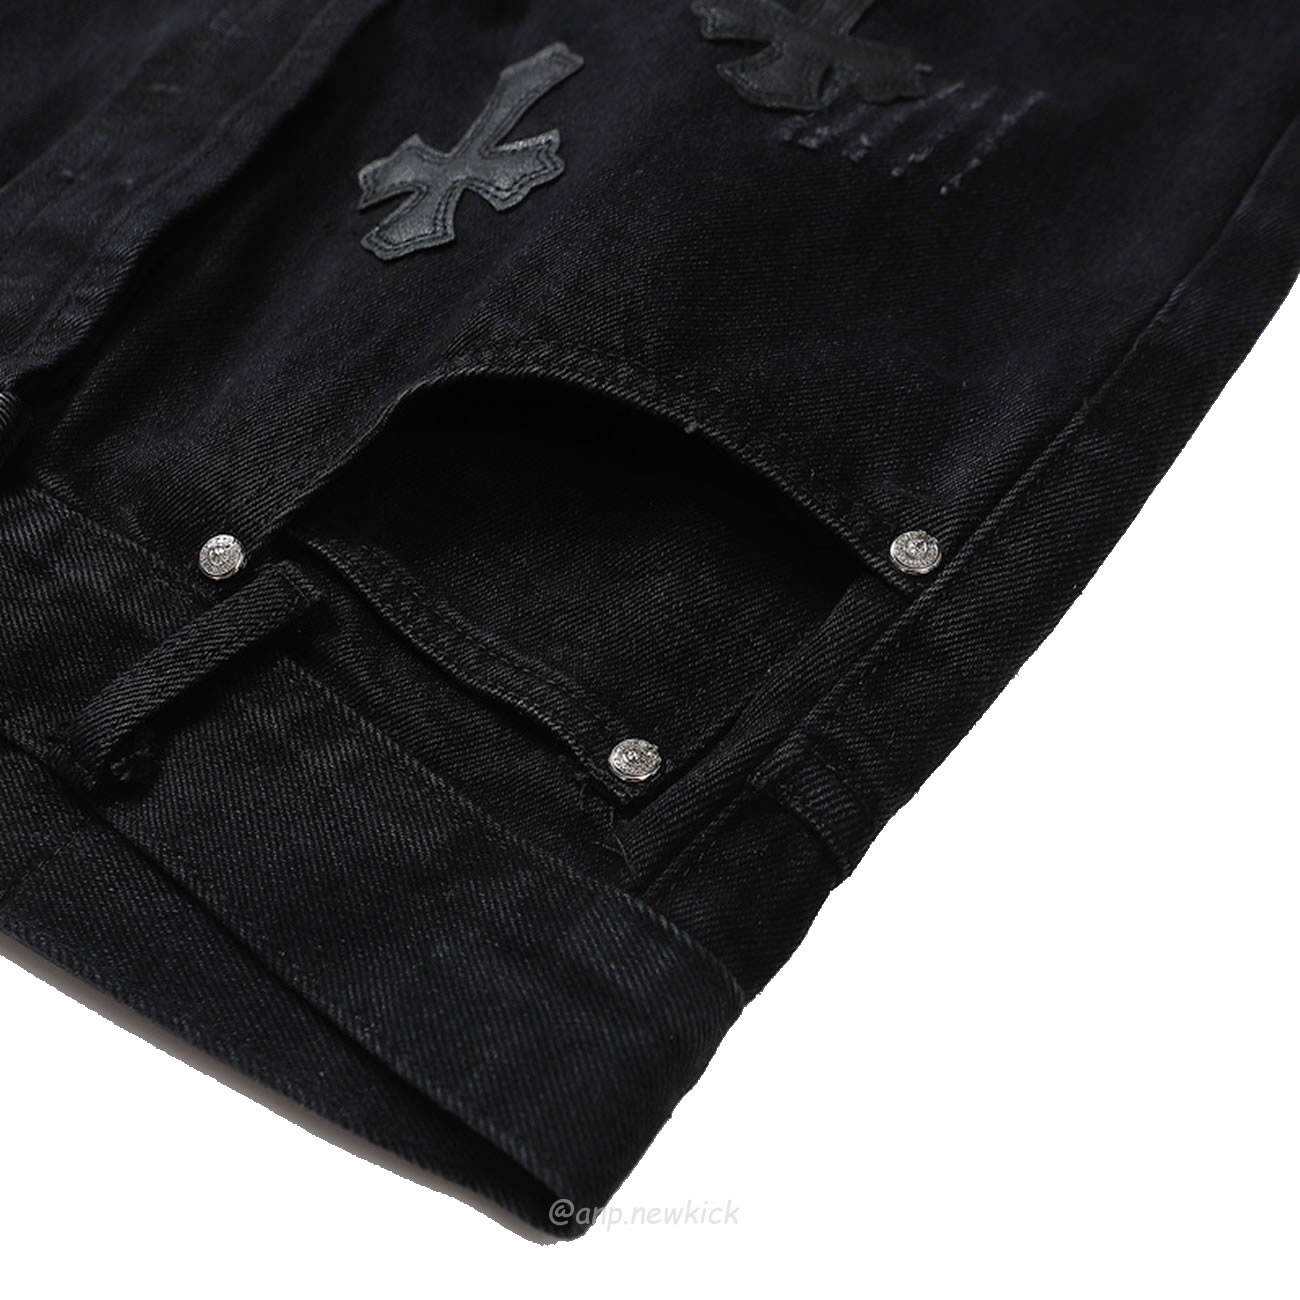 Chrome Hearts Black Cross Jeans (8) - newkick.org